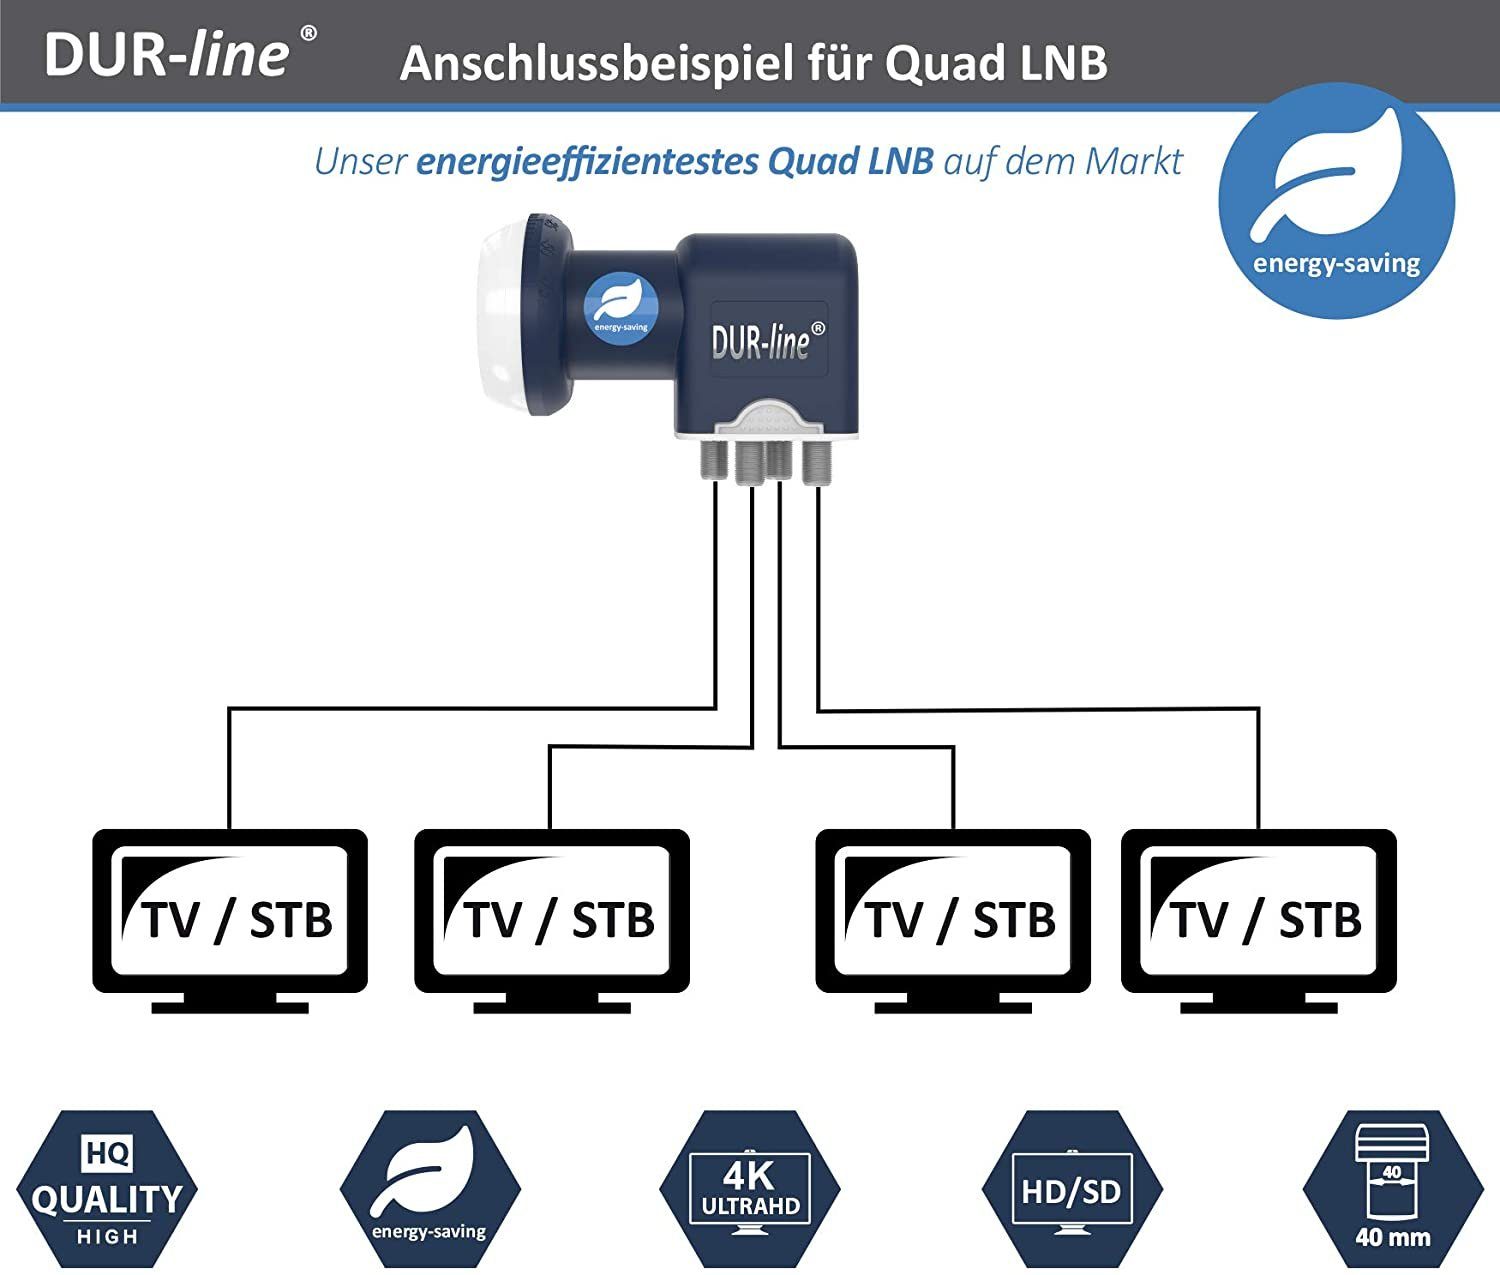 DUR-line DUR-line Blue ECO Stromspar-LNB - Quad - Teilnehmer Premium-Qualit Universal-Quad-LNB - 4